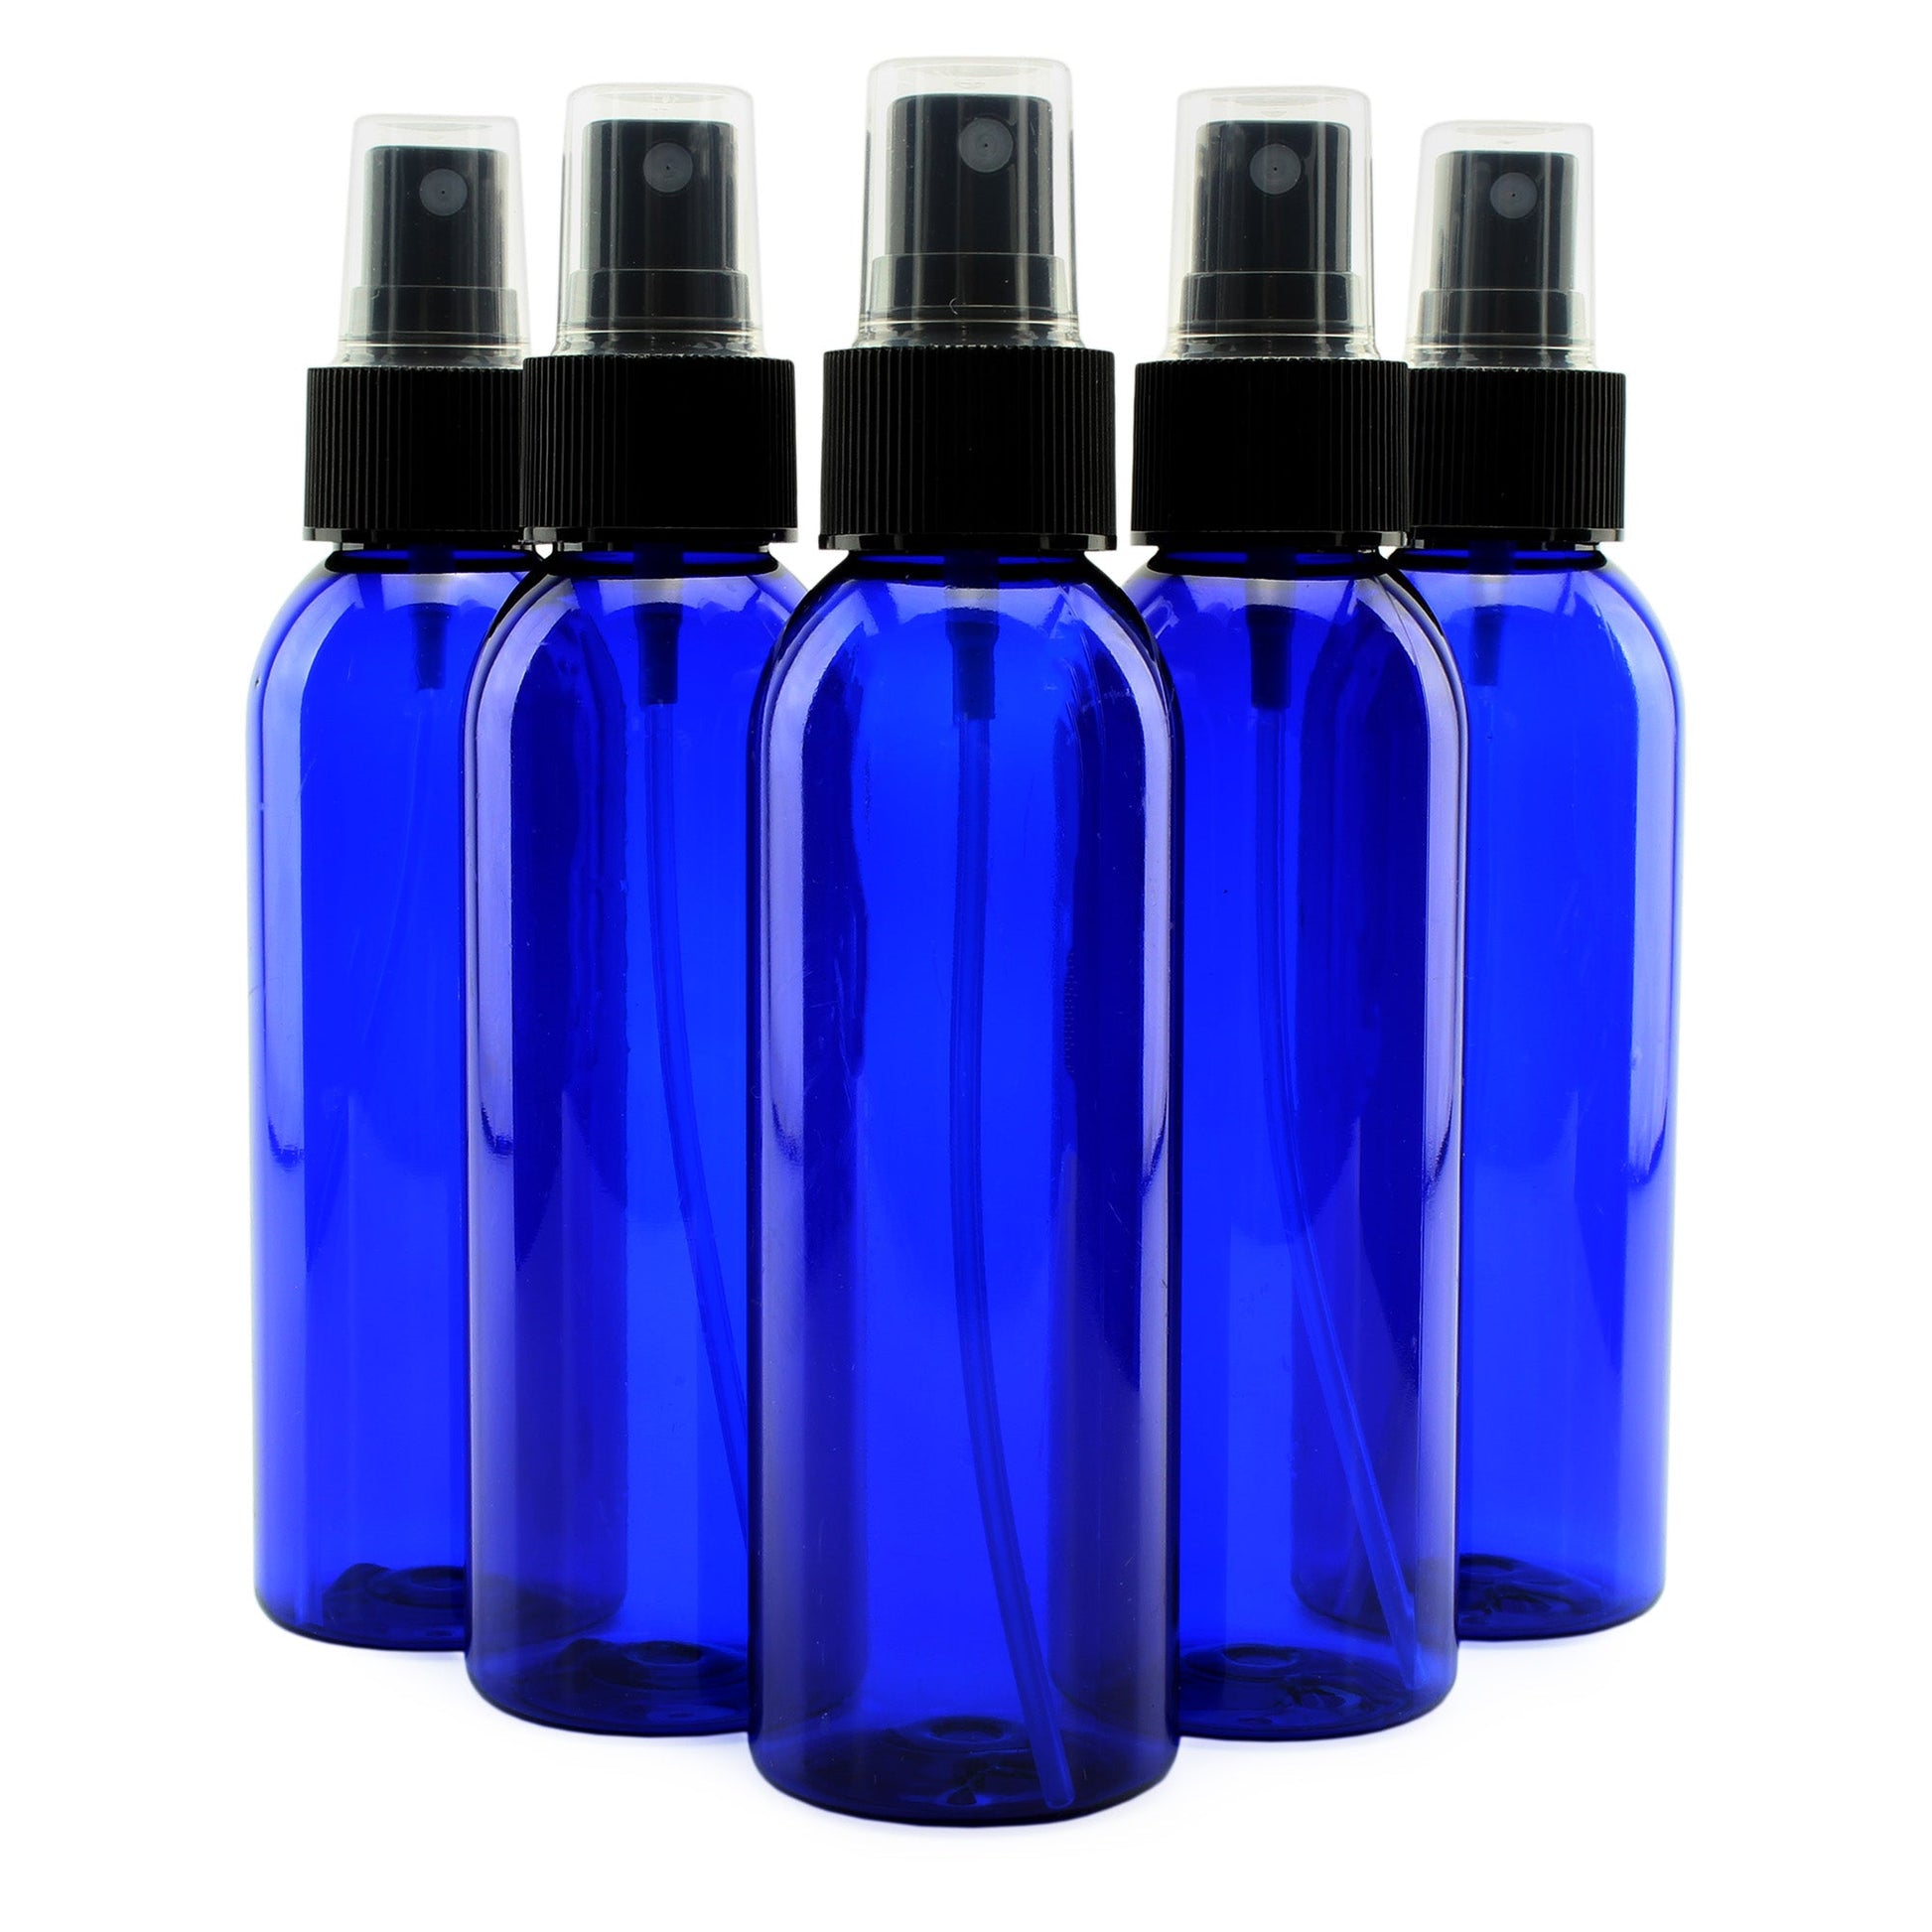 4oz Blue Empty Plastic Refillable PET Spray Bottles w/Fine Mist Atomizer Caps (6-Pack) - sh1420cb0mnw